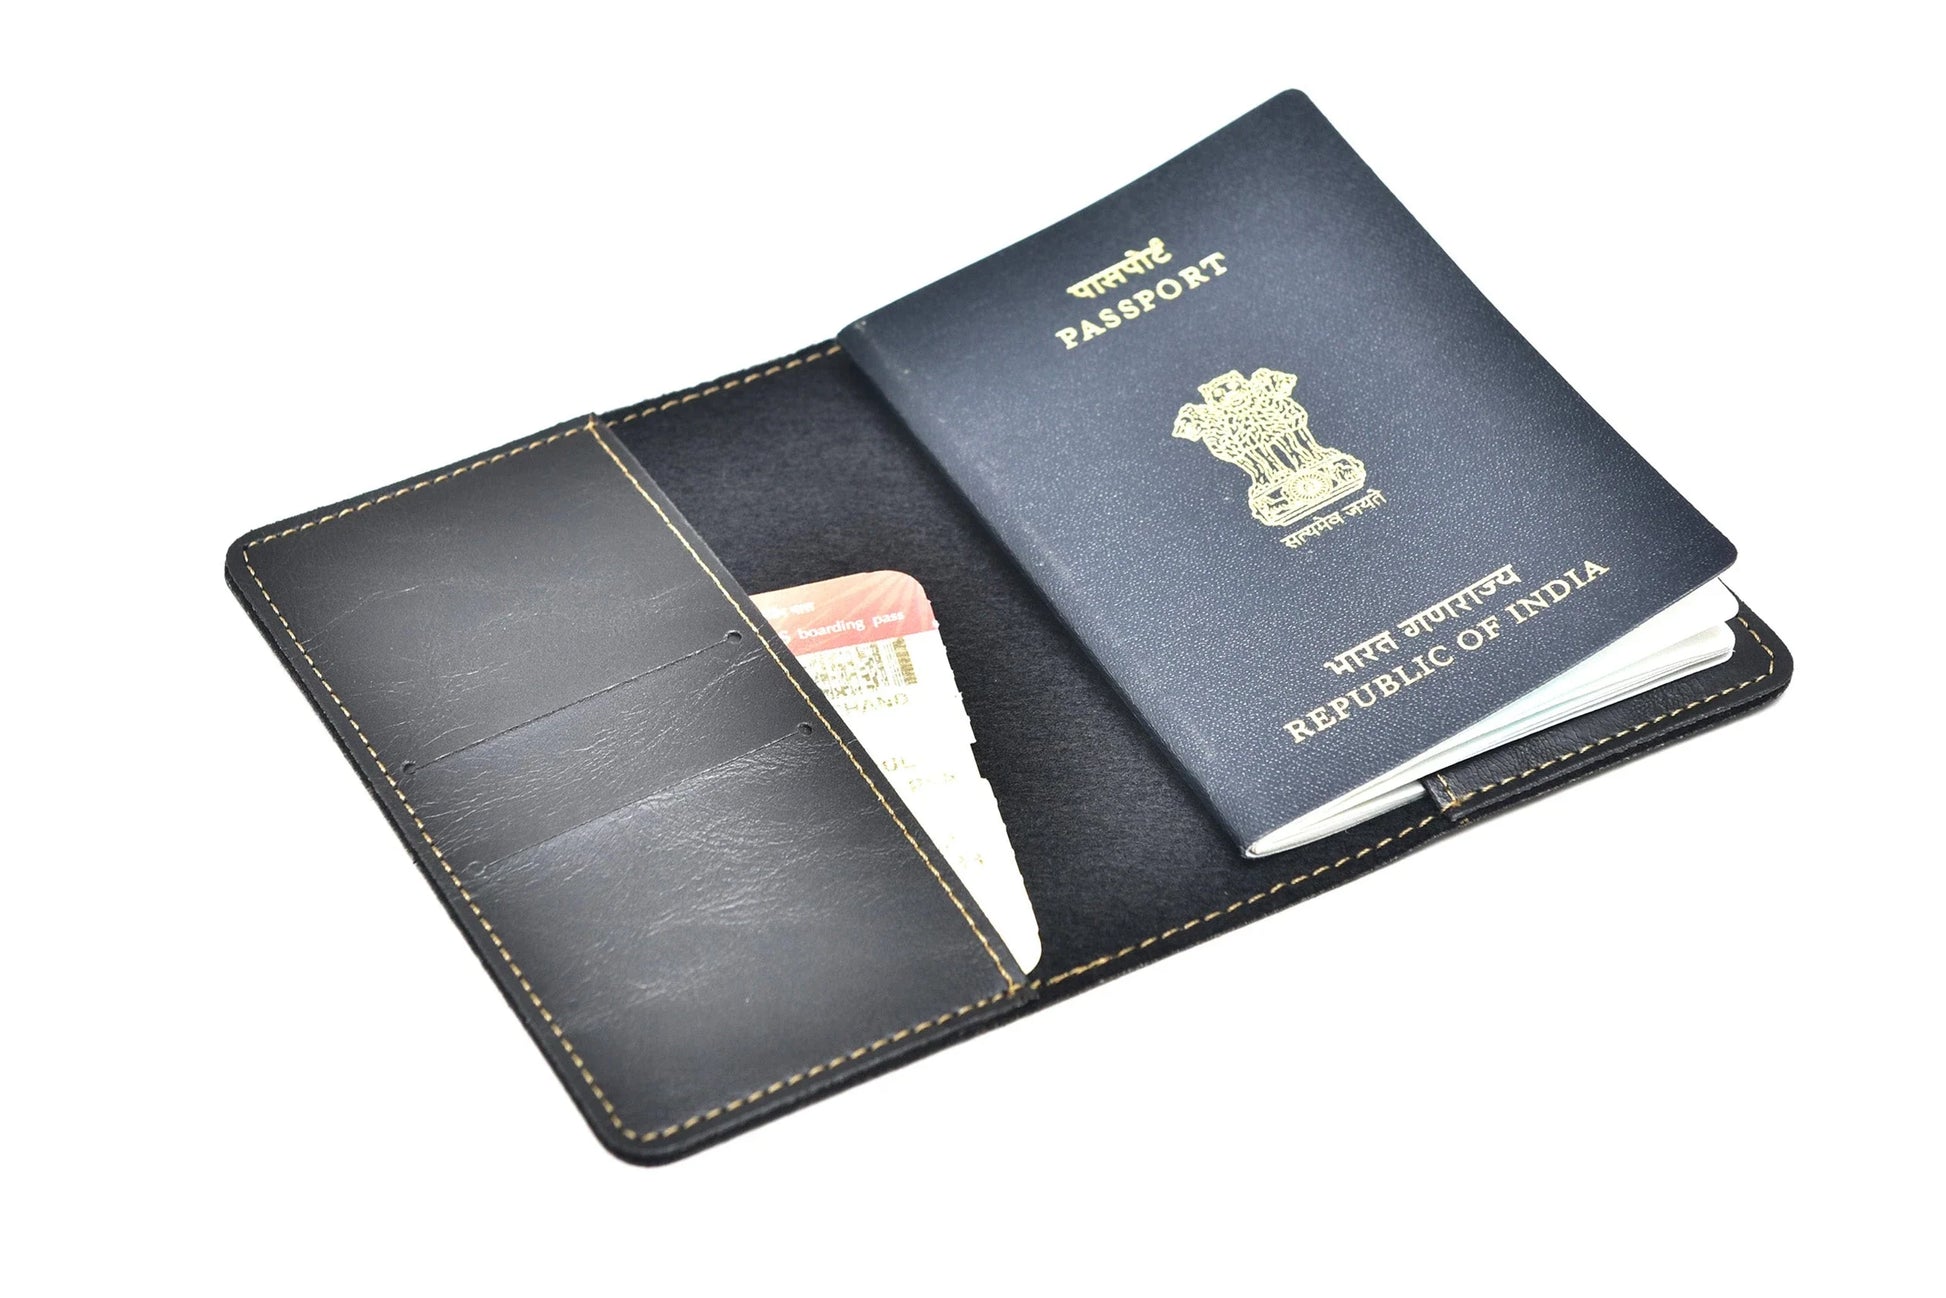 Inside or open view of black passport